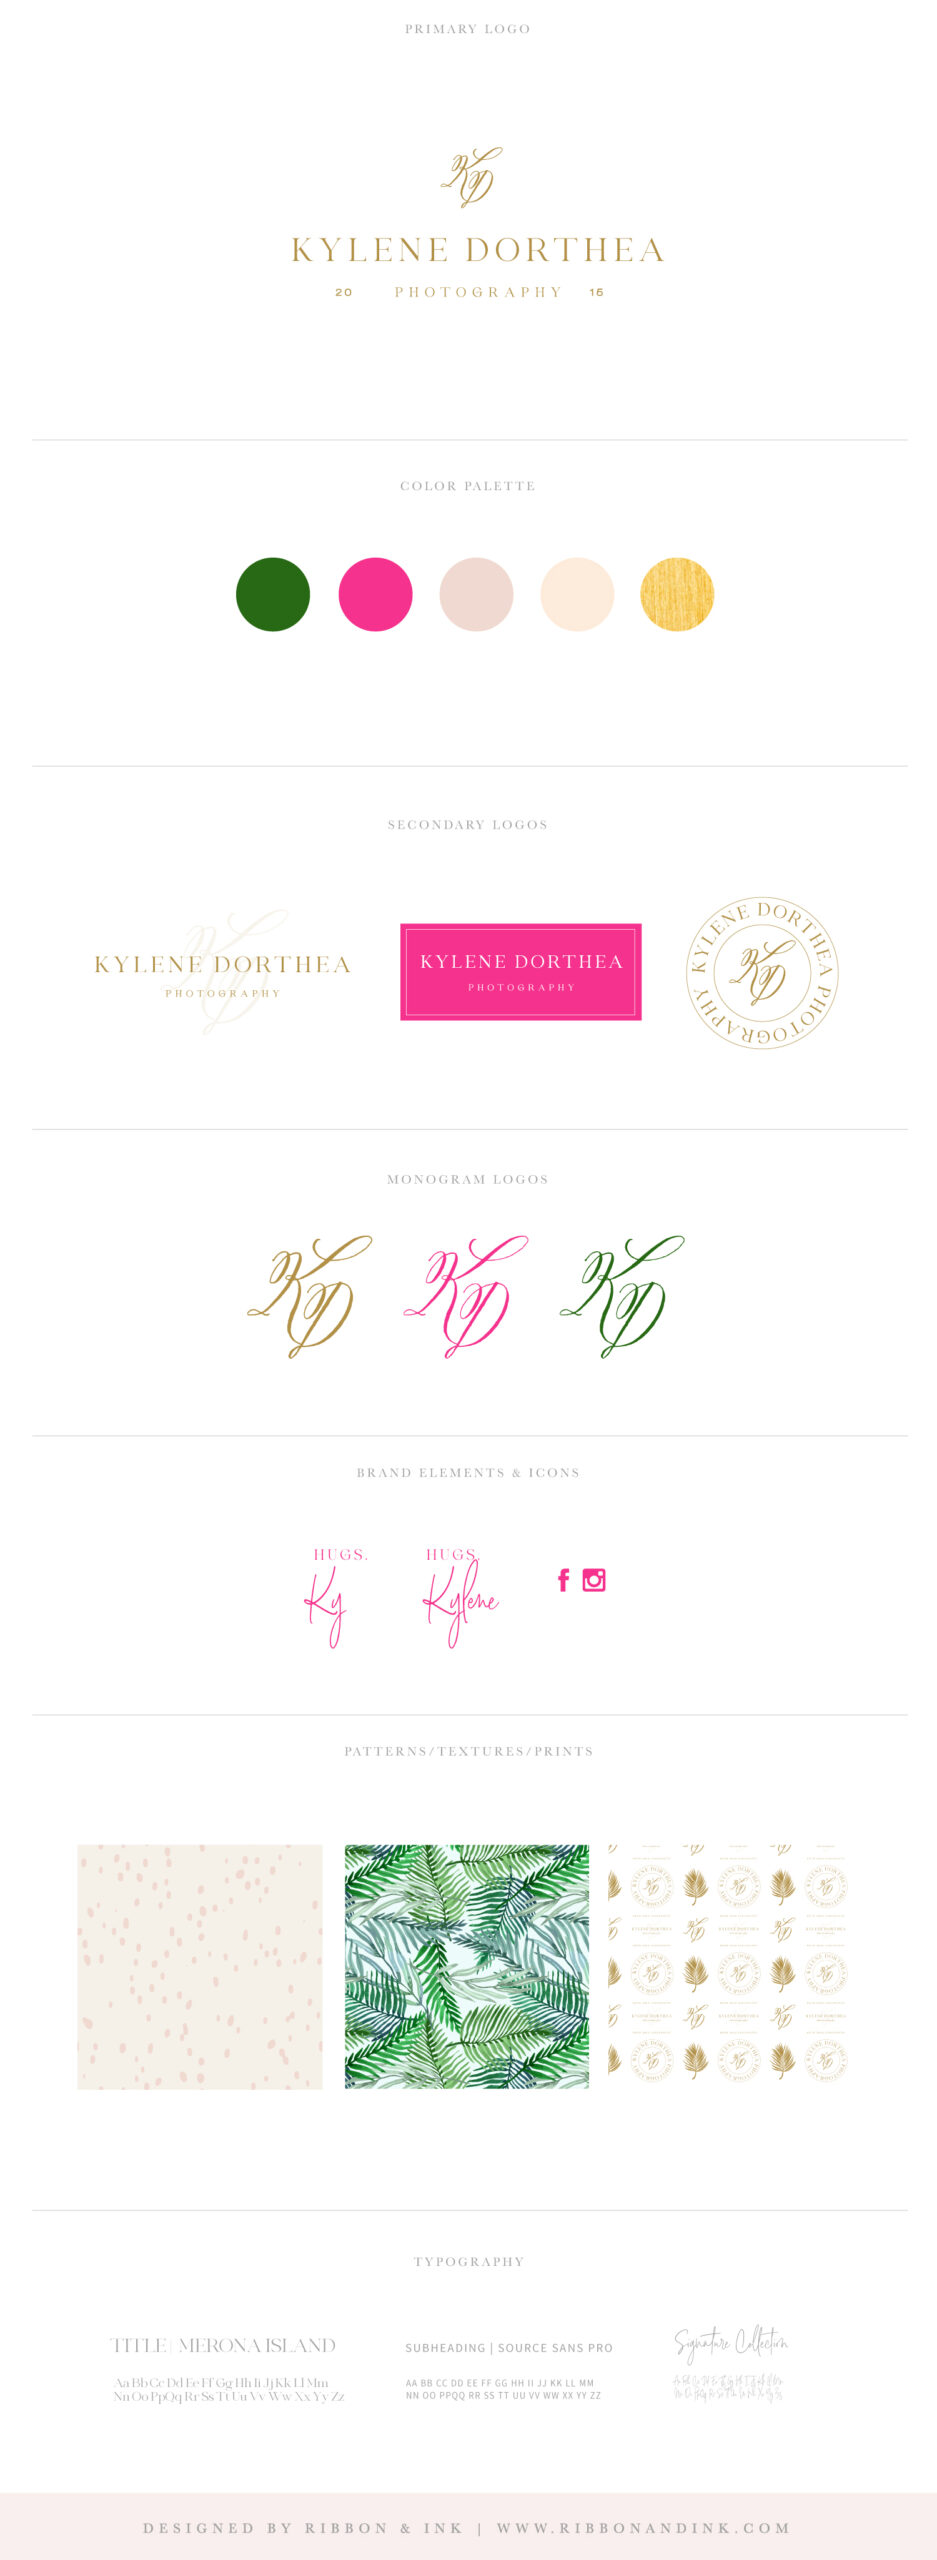 custom brand board / brand identity for wedding photographer / hot pink / tropical